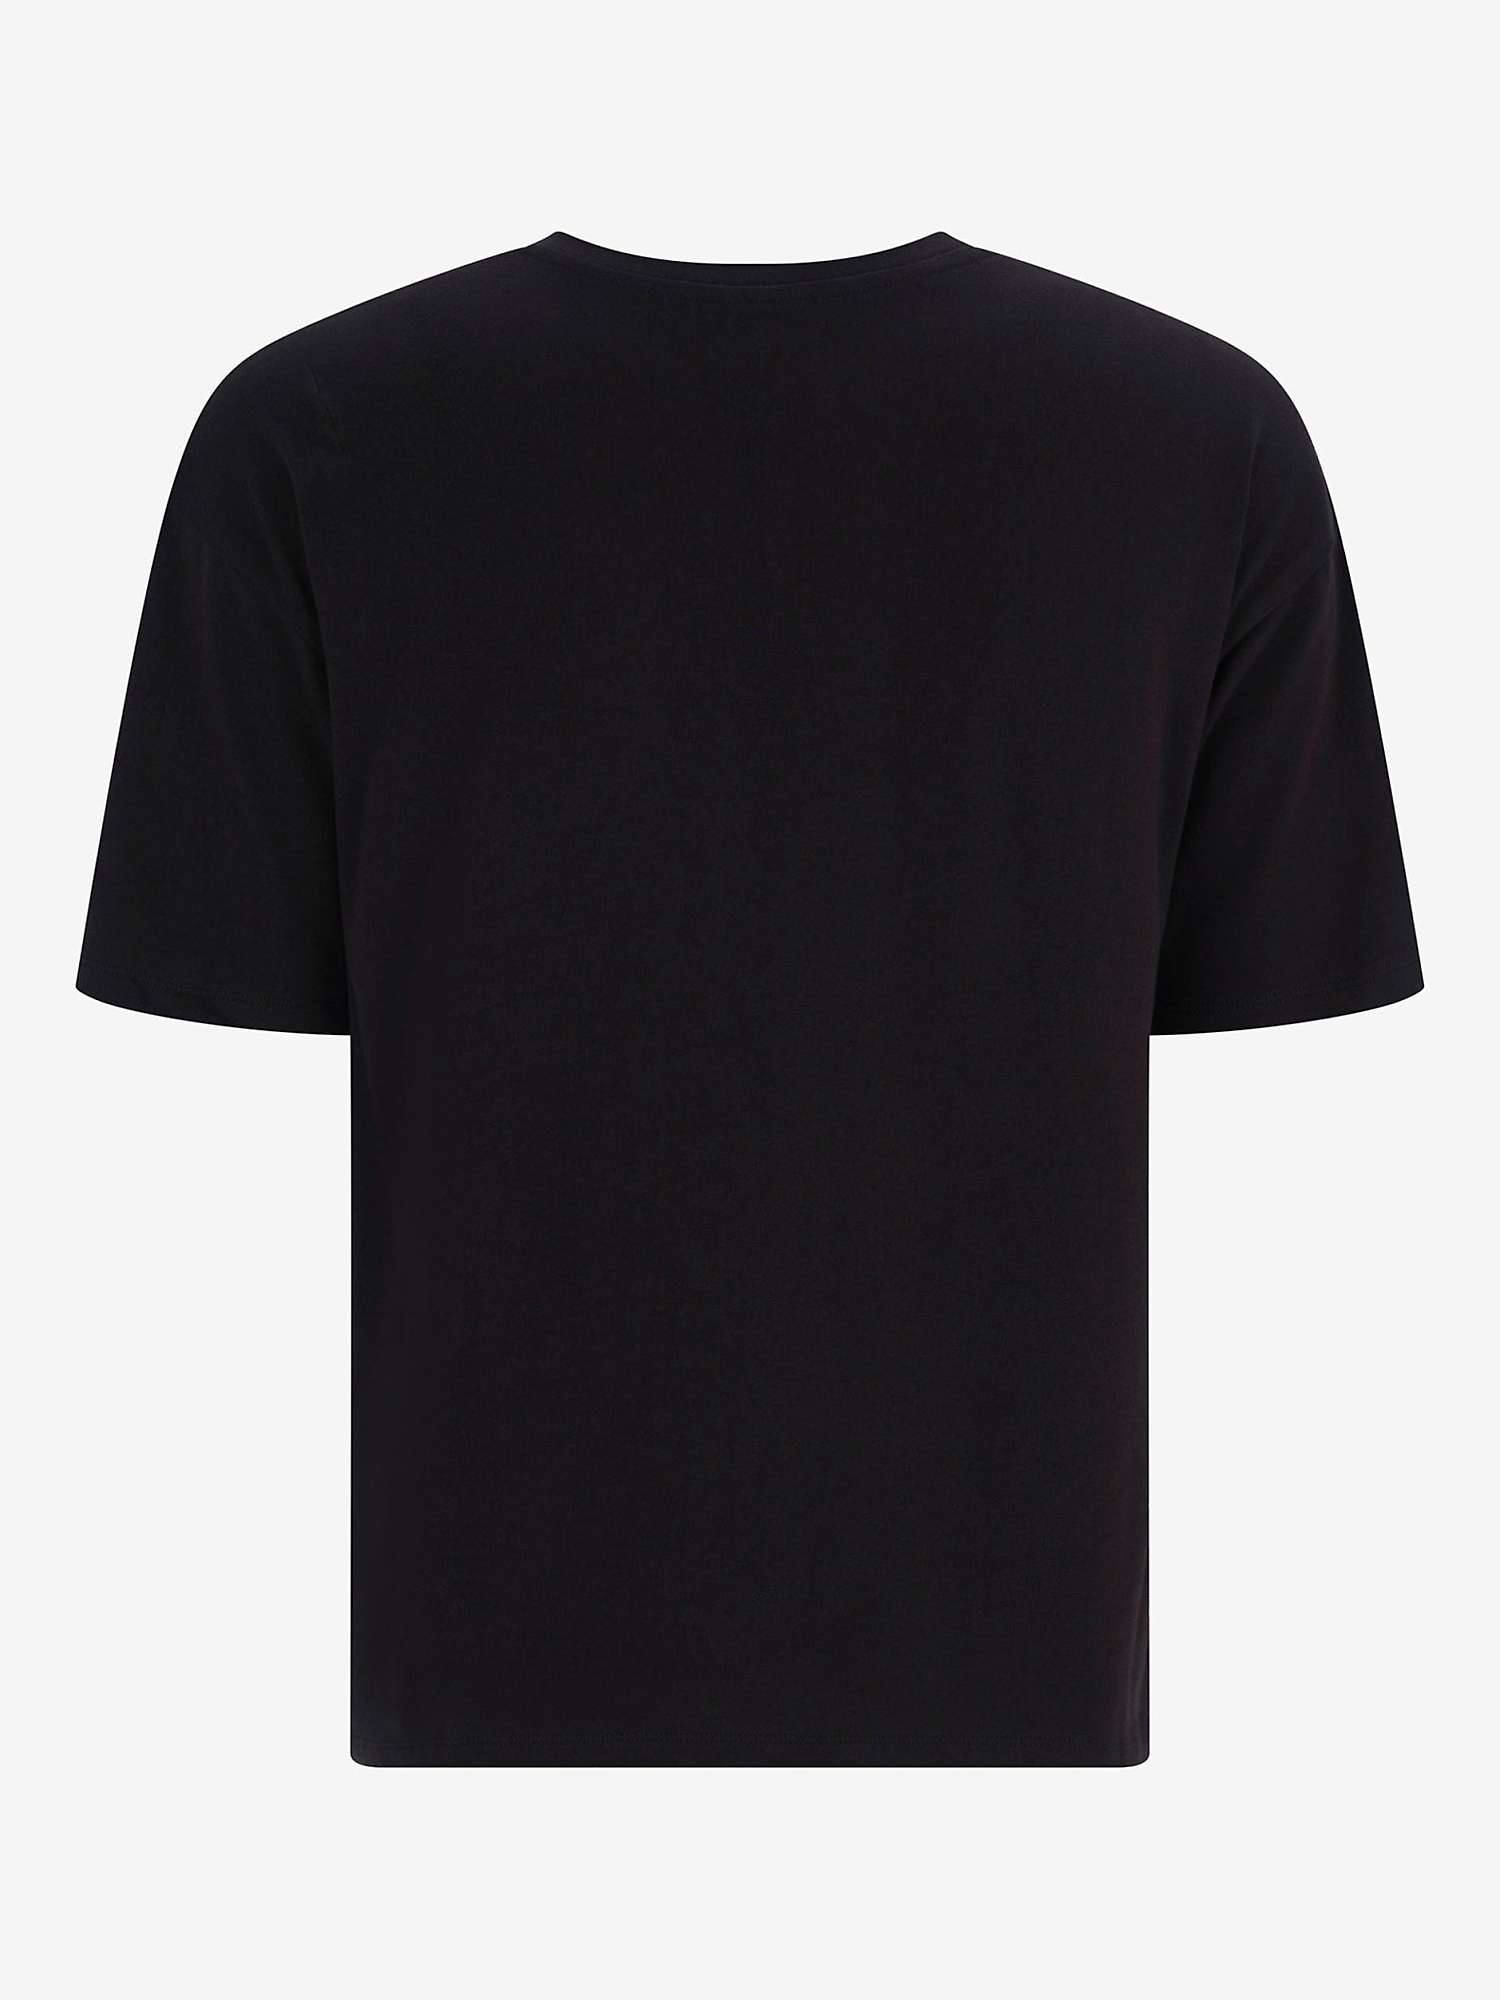 Buy Mint Velvet Fleetwood Mac T-Shirt, Black Online at johnlewis.com